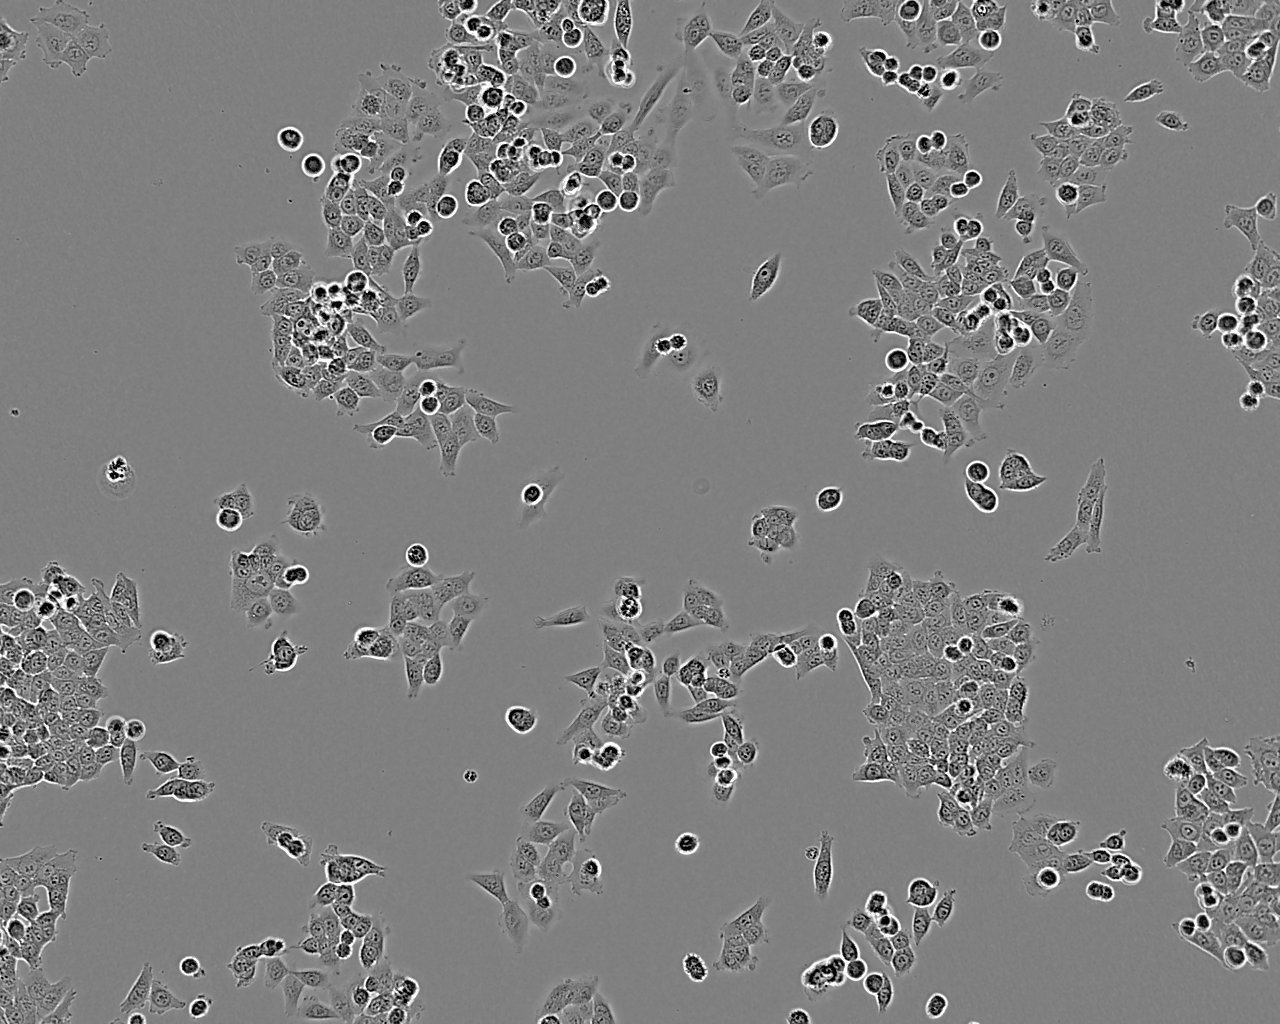 NCI-H520 epithelioid cells人肺腺鳞癌细胞系